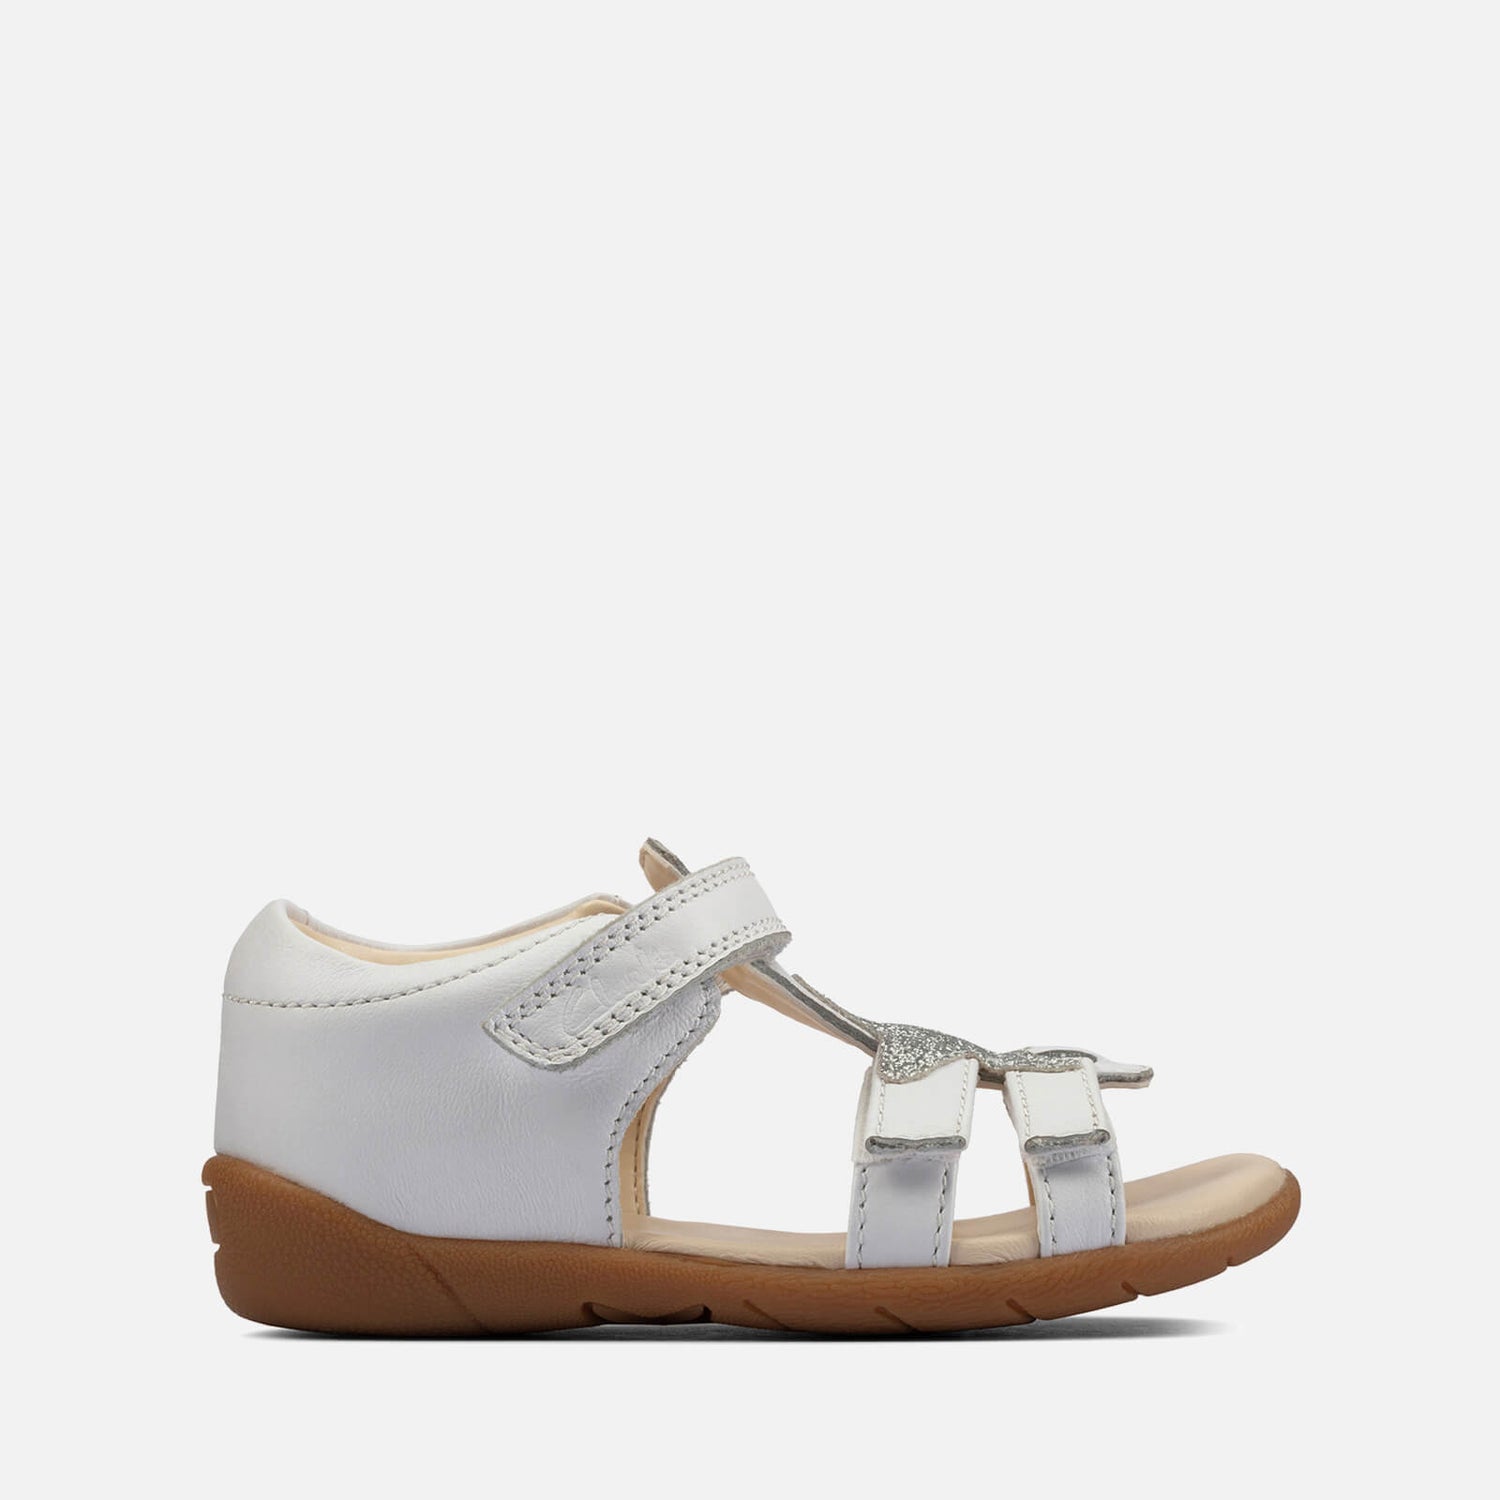 Clarks Toddler Zora Summer Sandals - White Leather